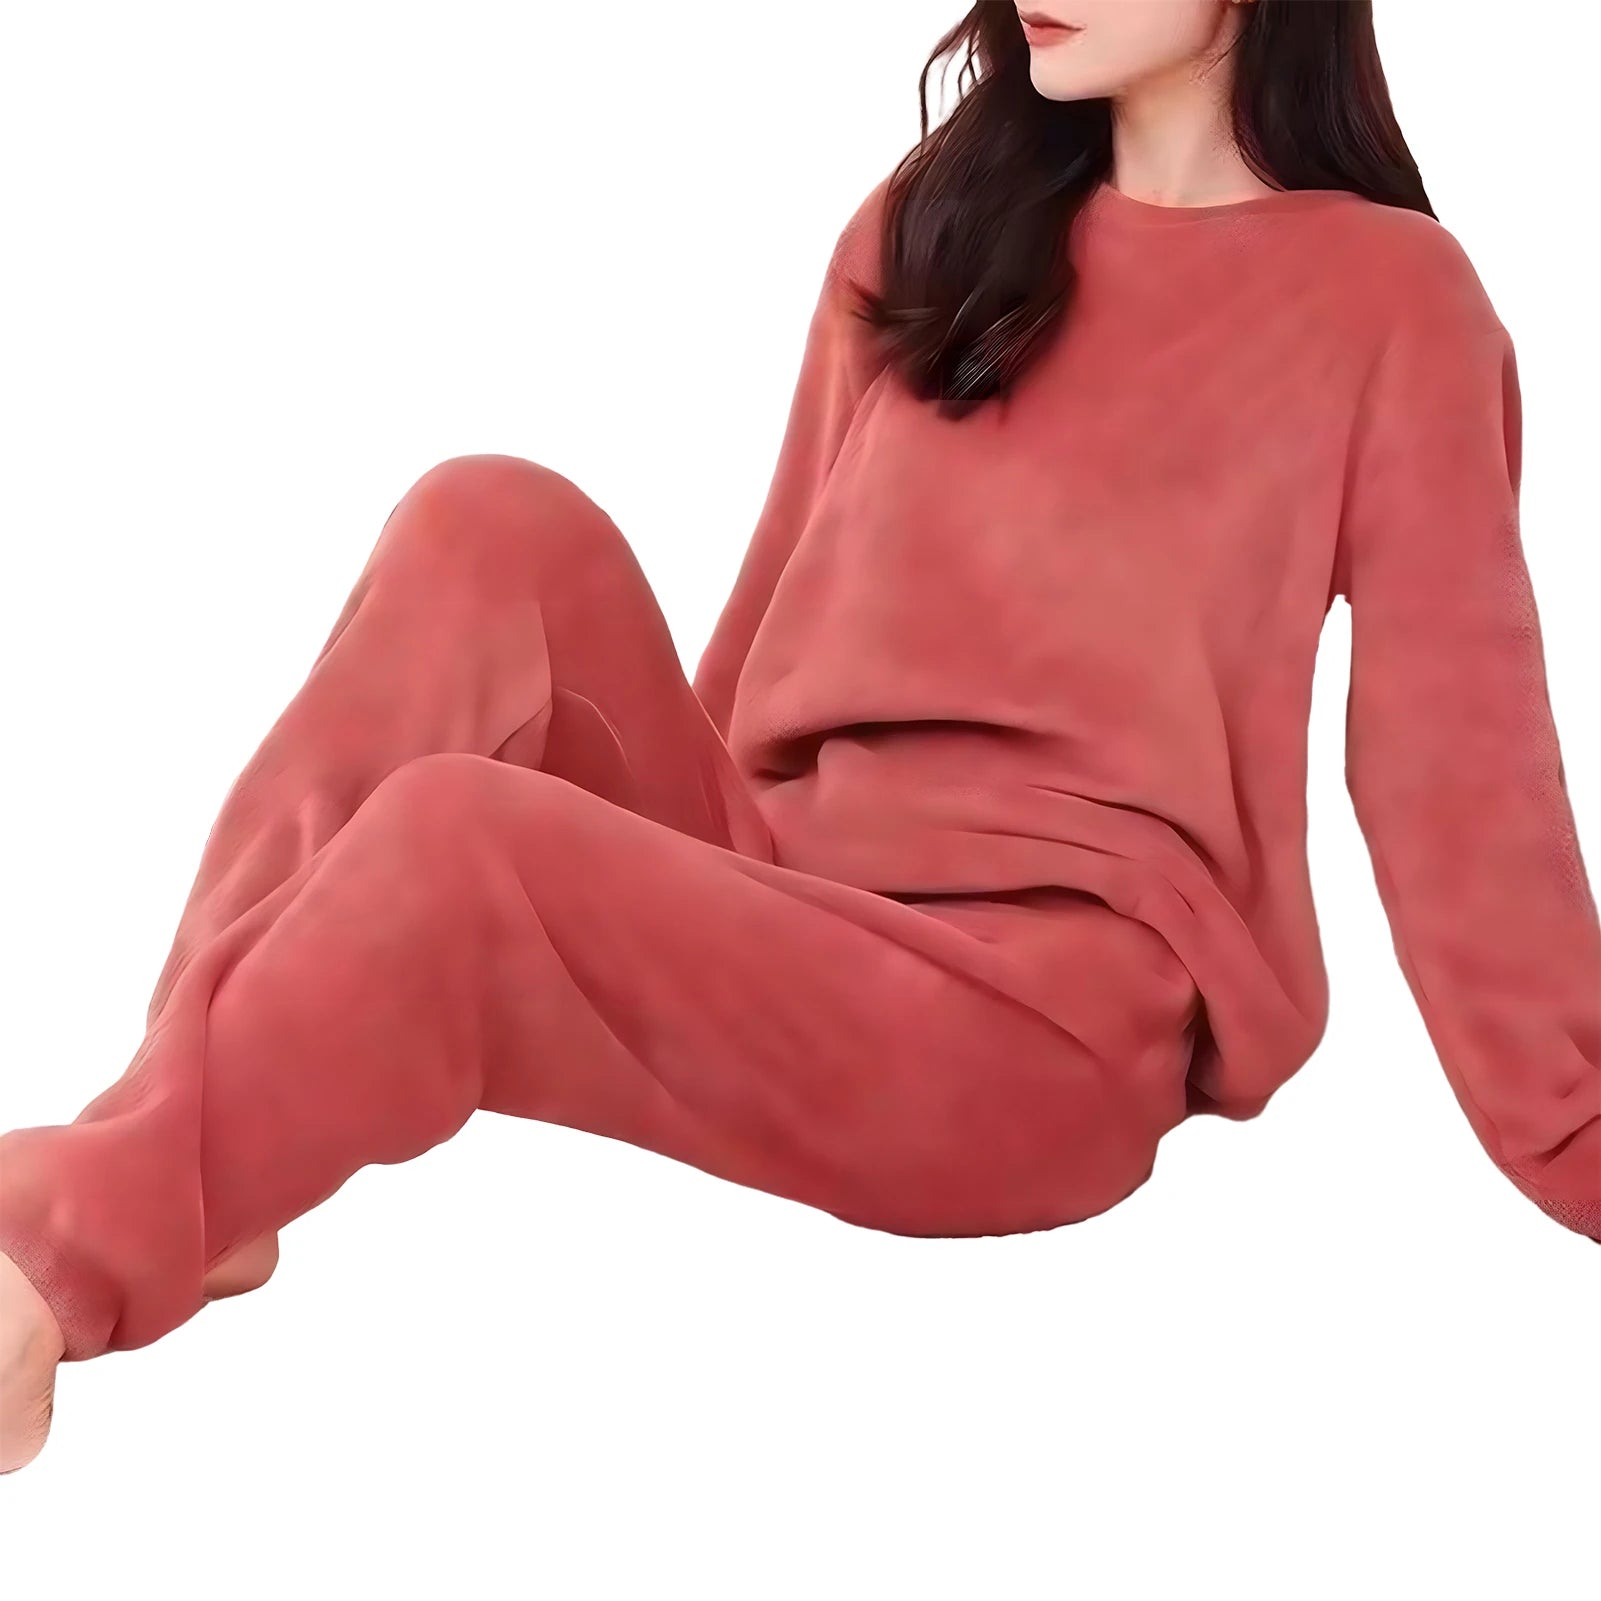 Pyjamas Sets - Warm Thick/Velvety, Flannel, Long Sleeve, Cartoon, Loungewear/Sleepwear - Wine Red